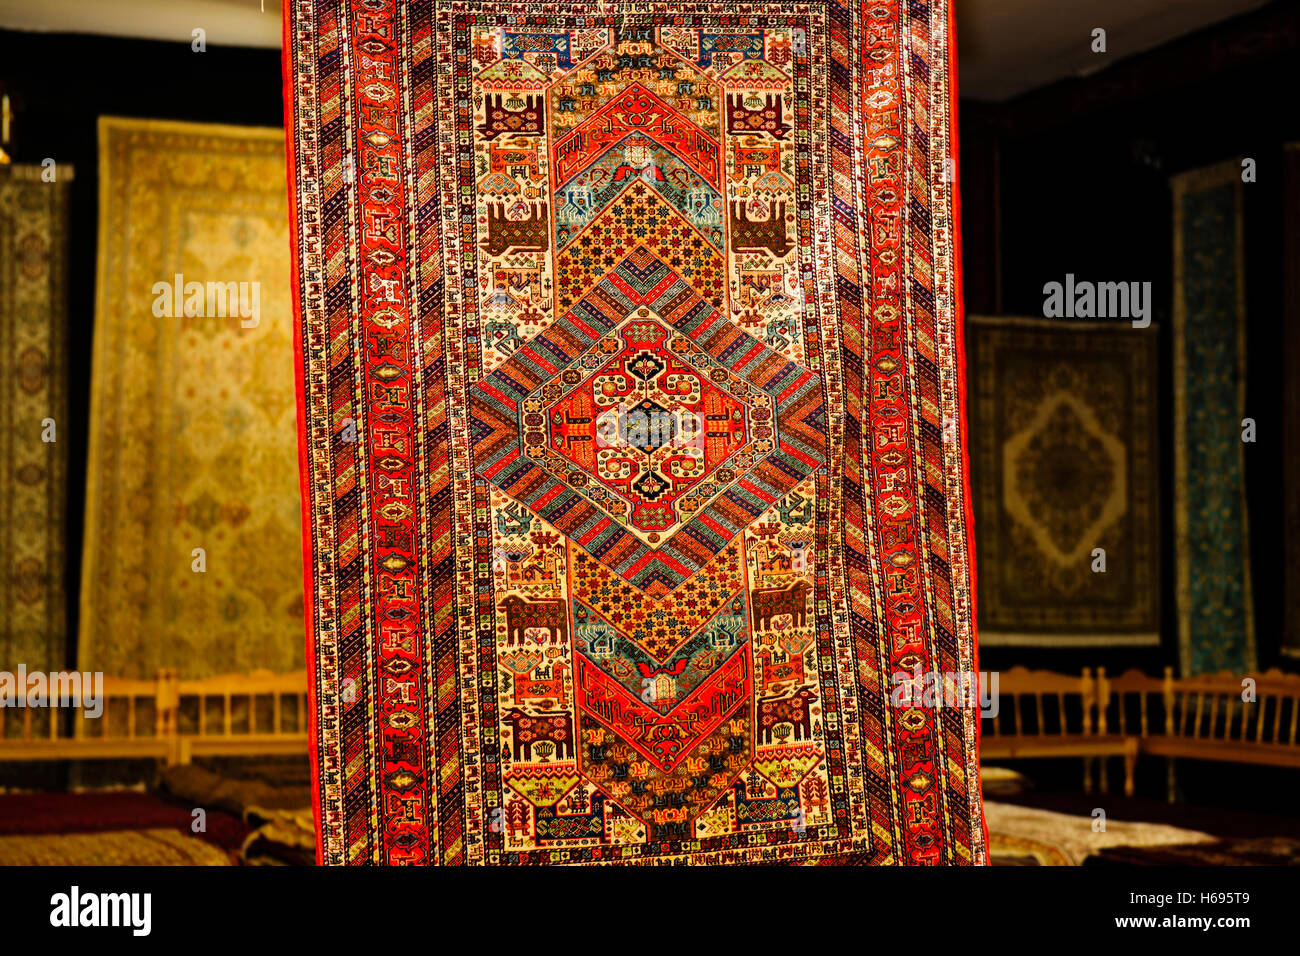 Bukhara,Desert Town,Islamic,Muslim Enclave,Mosques,Arts,Crafts,Uzbekistan,Central Asia Stock Photo